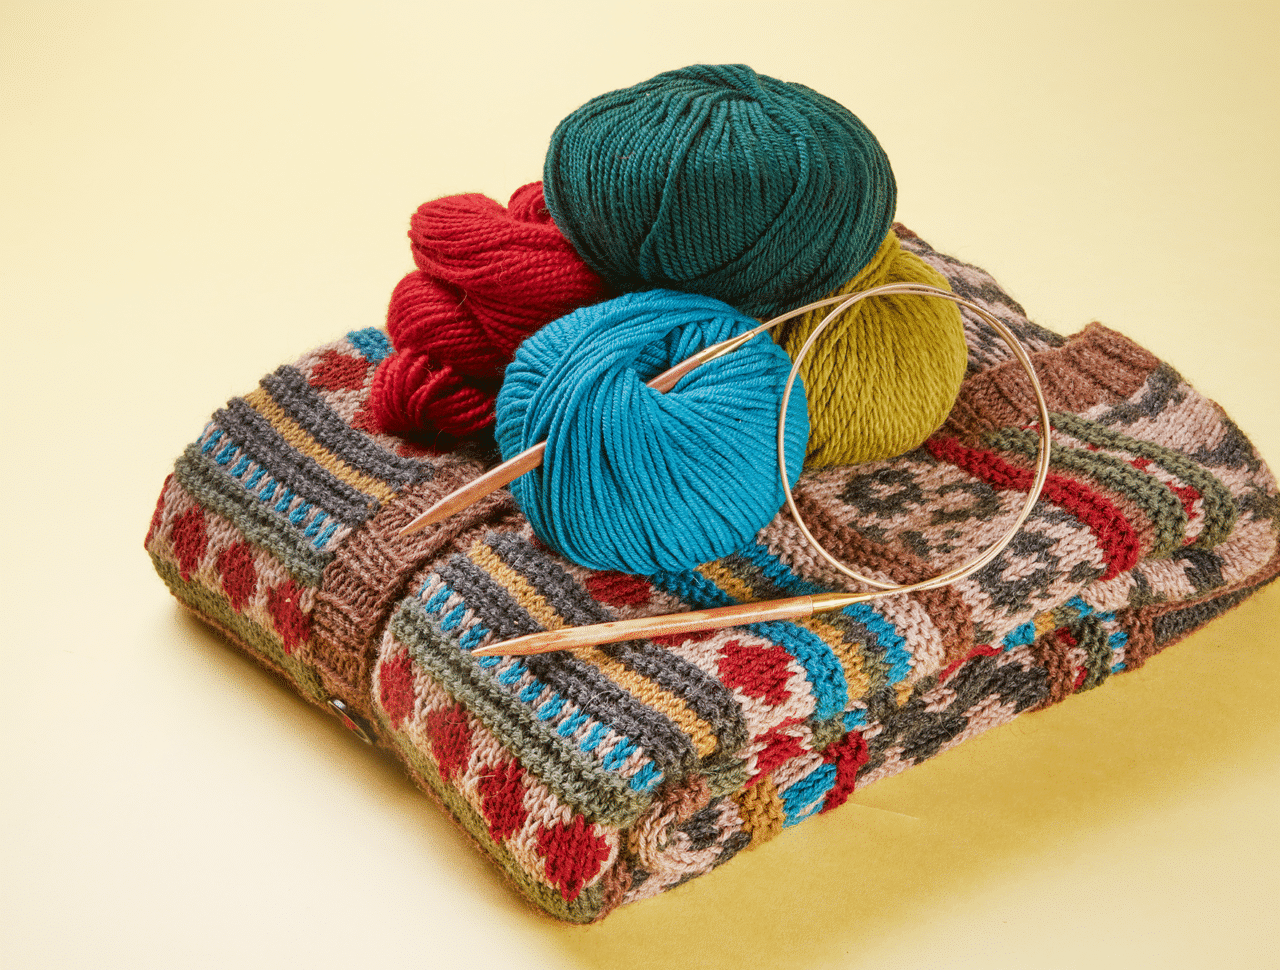 addi needle wool jumper knitting keeps warm,warm up,knitting for the needy